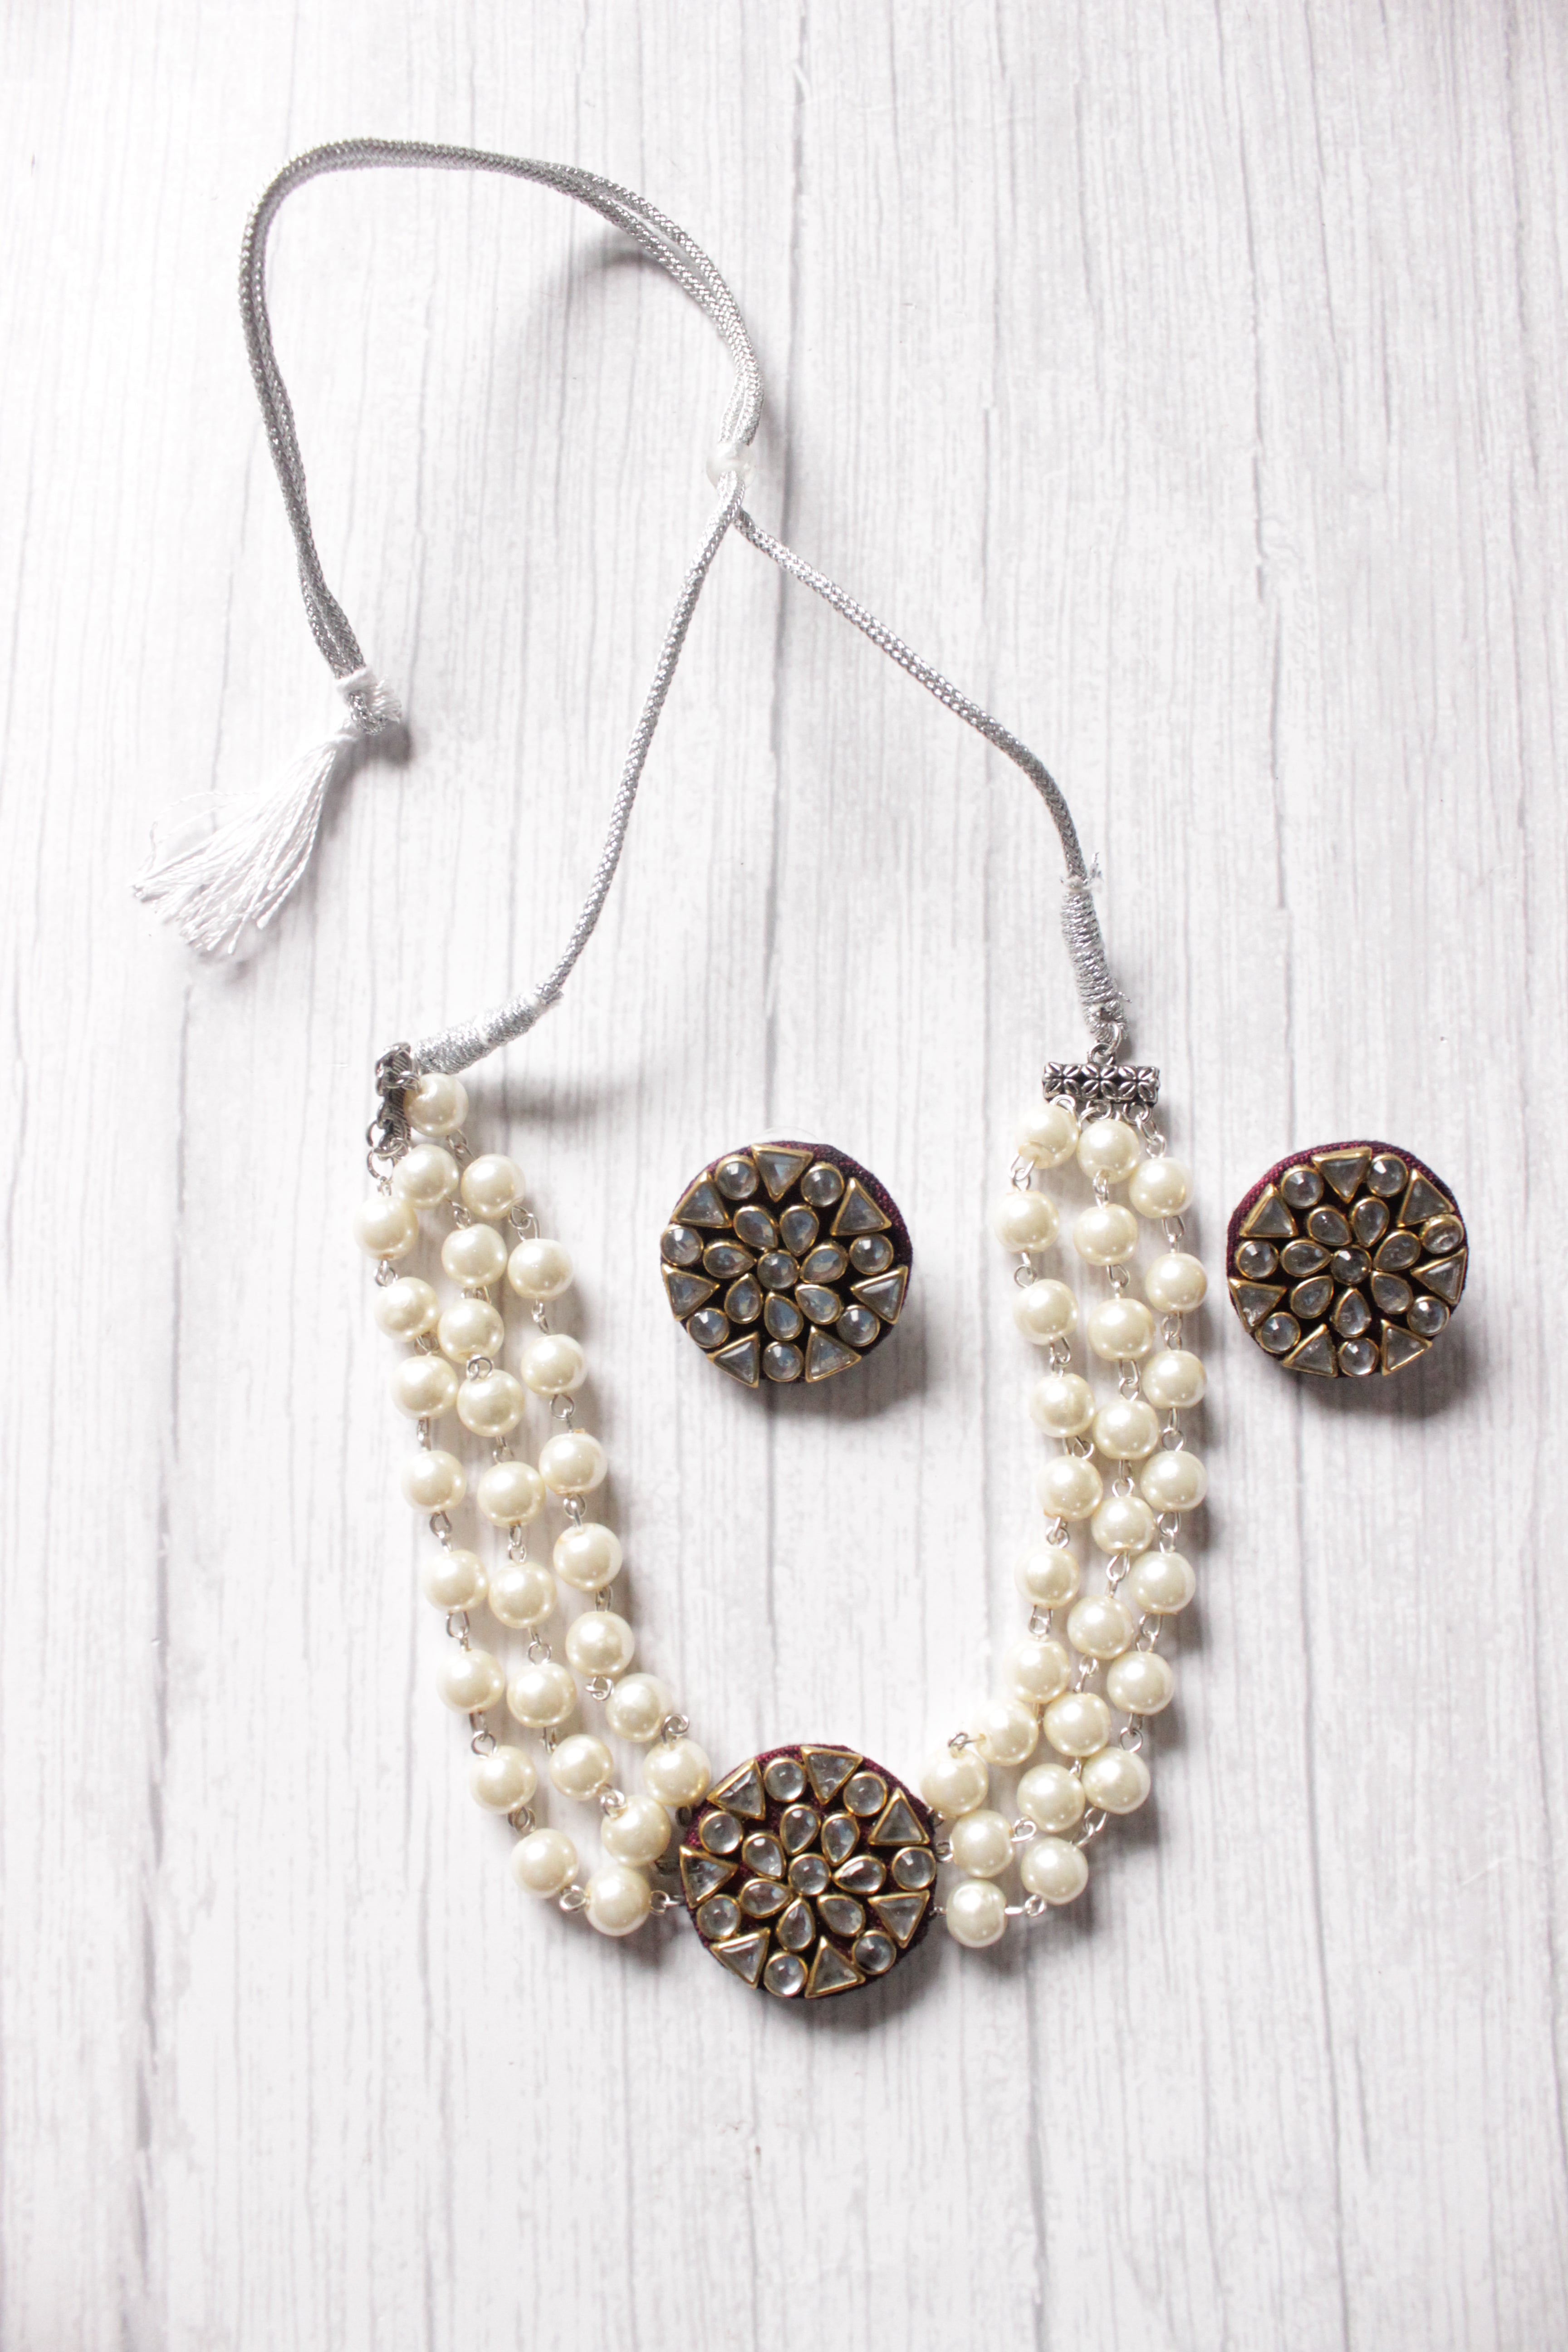 Kundan Stones Embedded Center Pendant White Beads Hand Braided Adjustable Length Choker Necklace Set